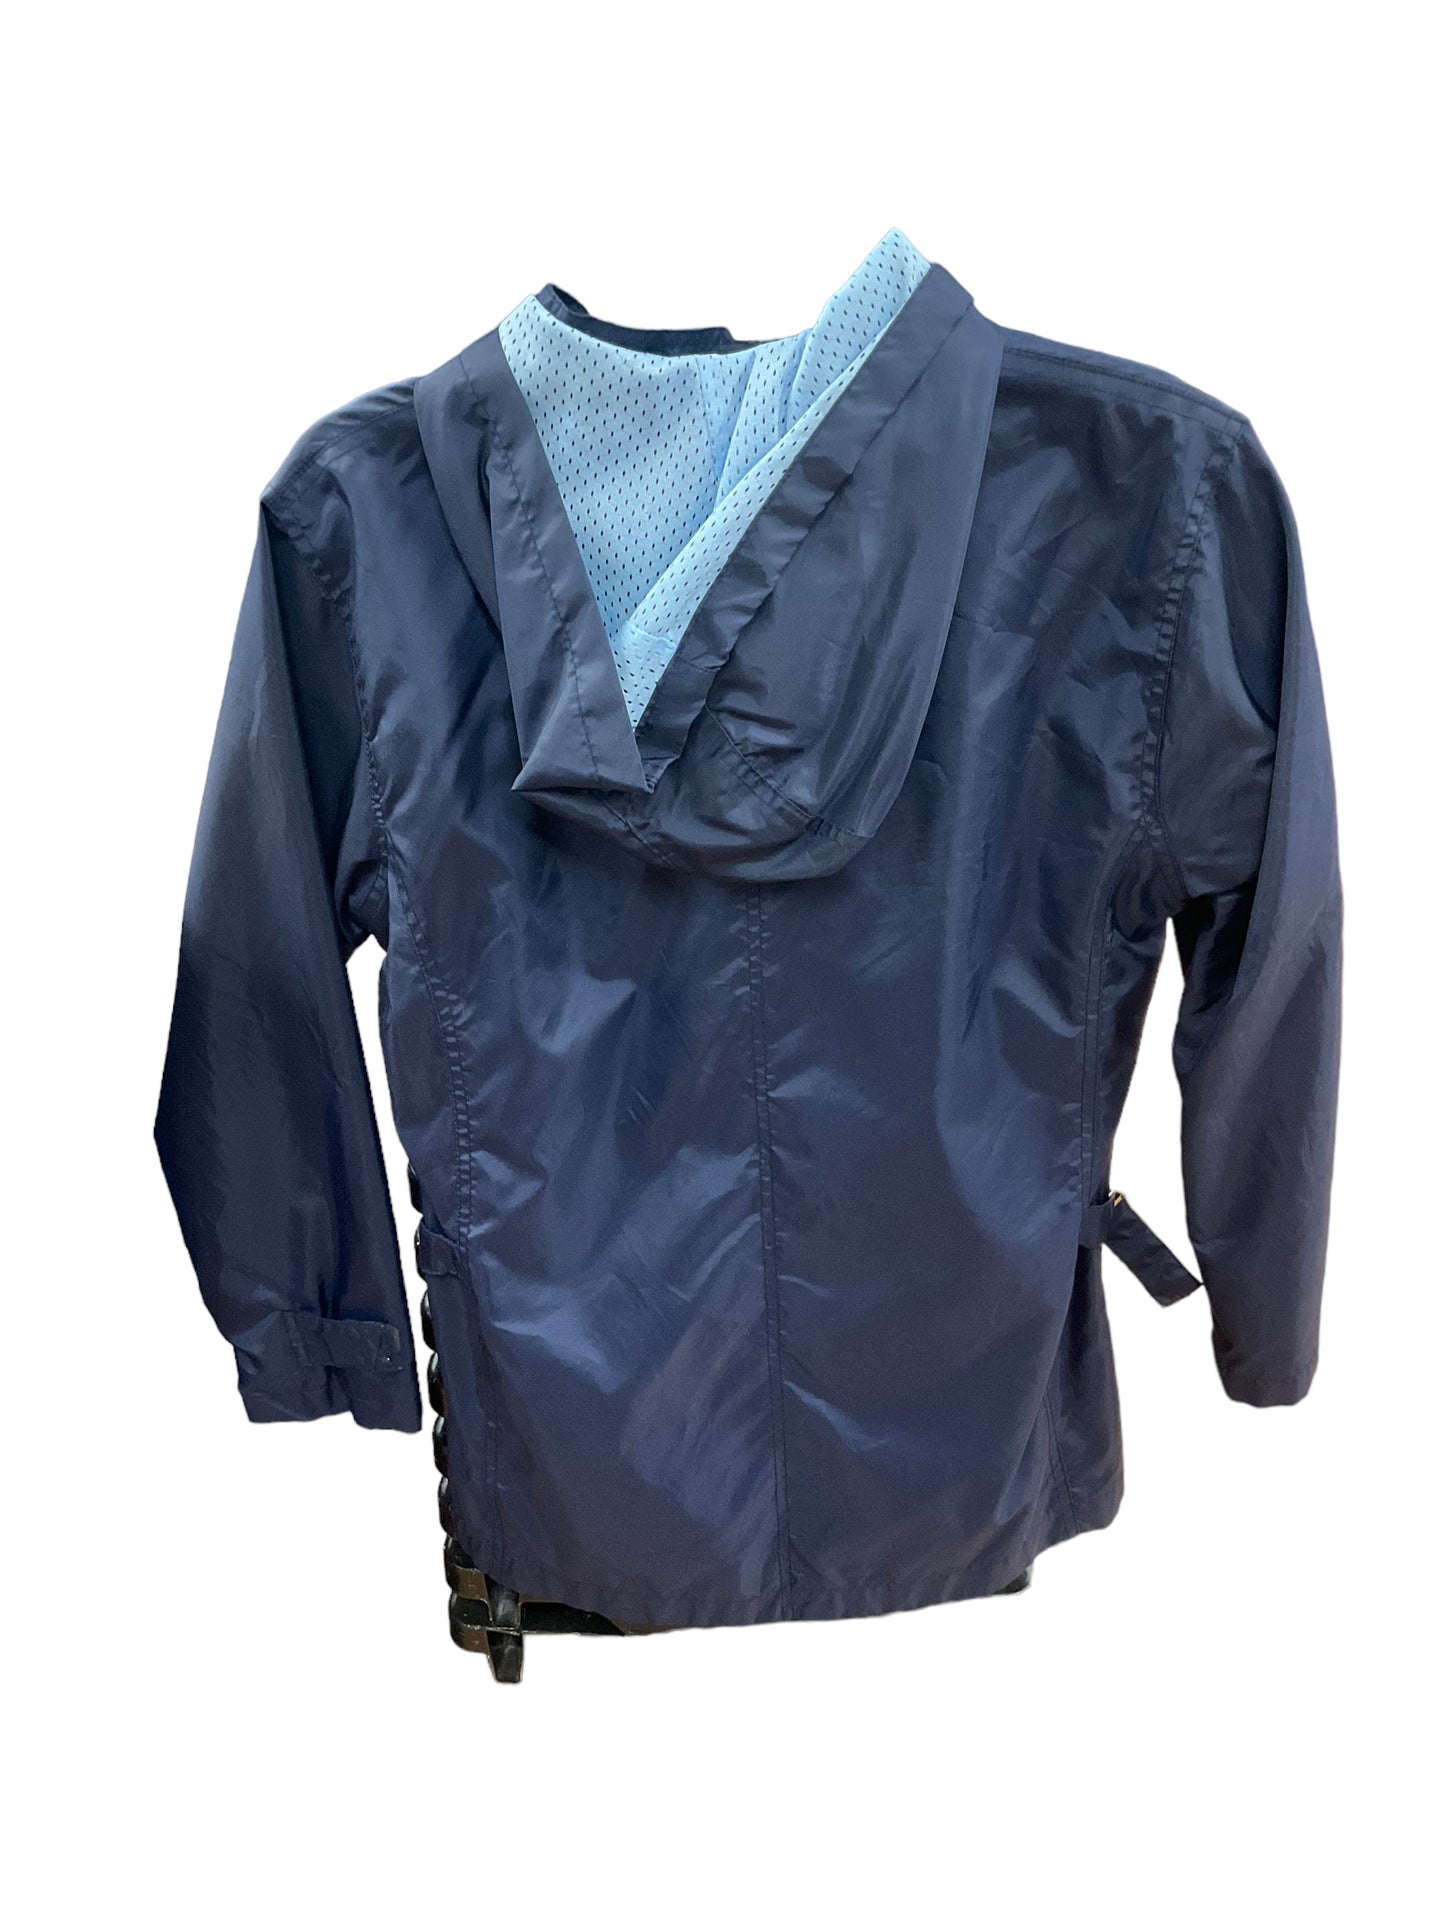 Coat Raincoat By Clothes Mentor  Size: M